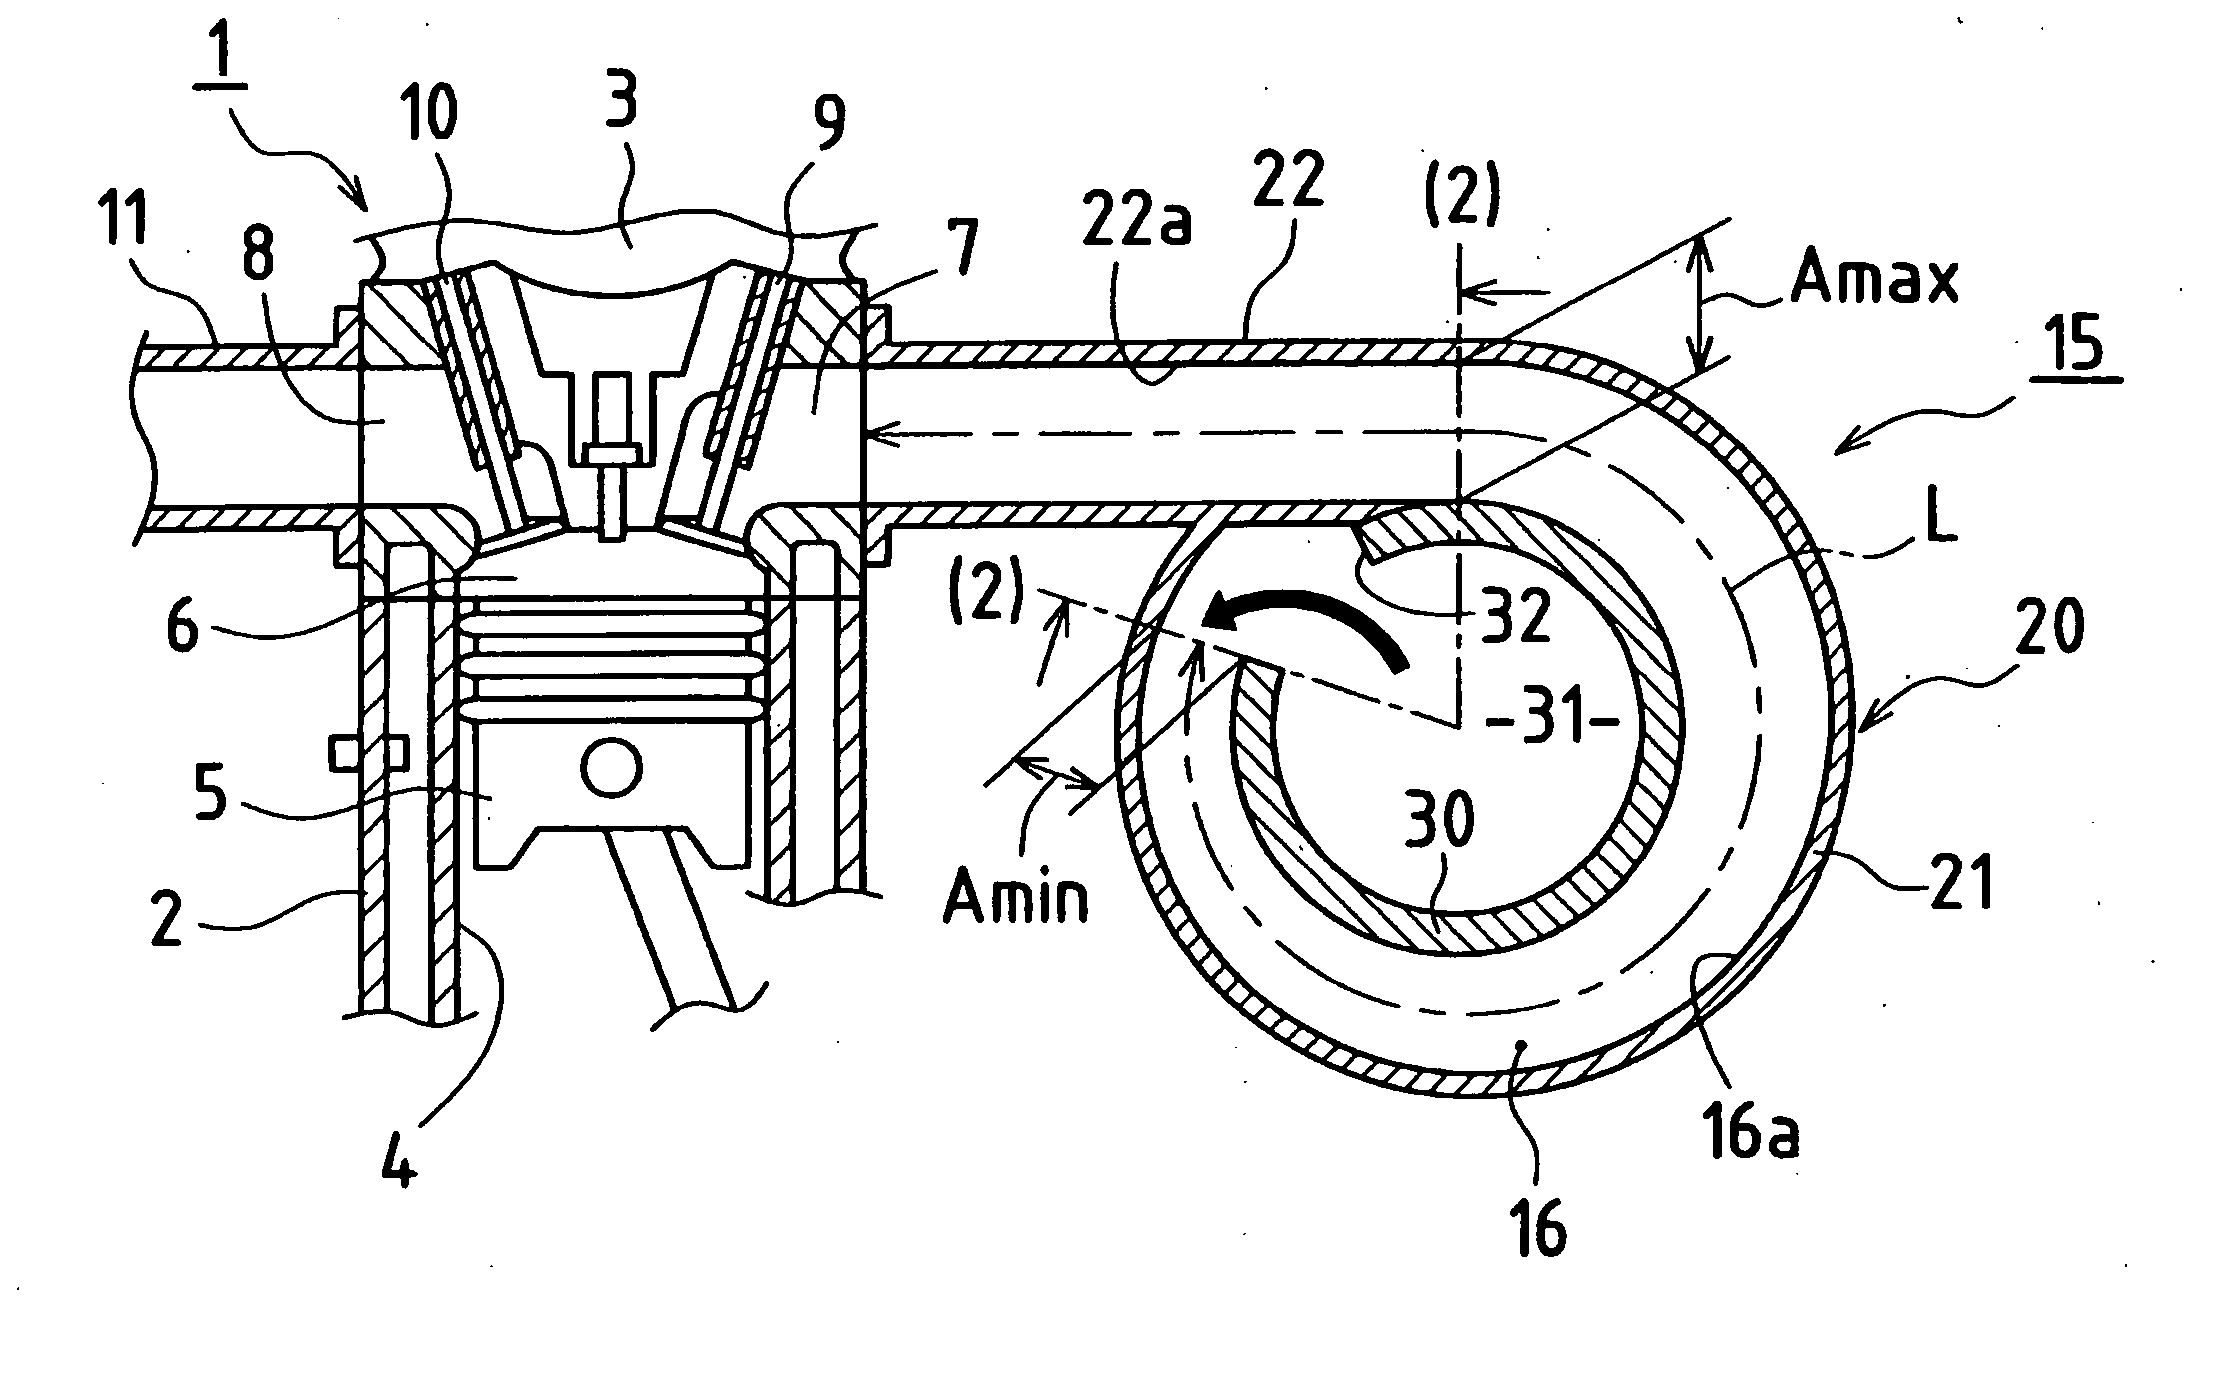 Intake apparatus of internal combustion engine